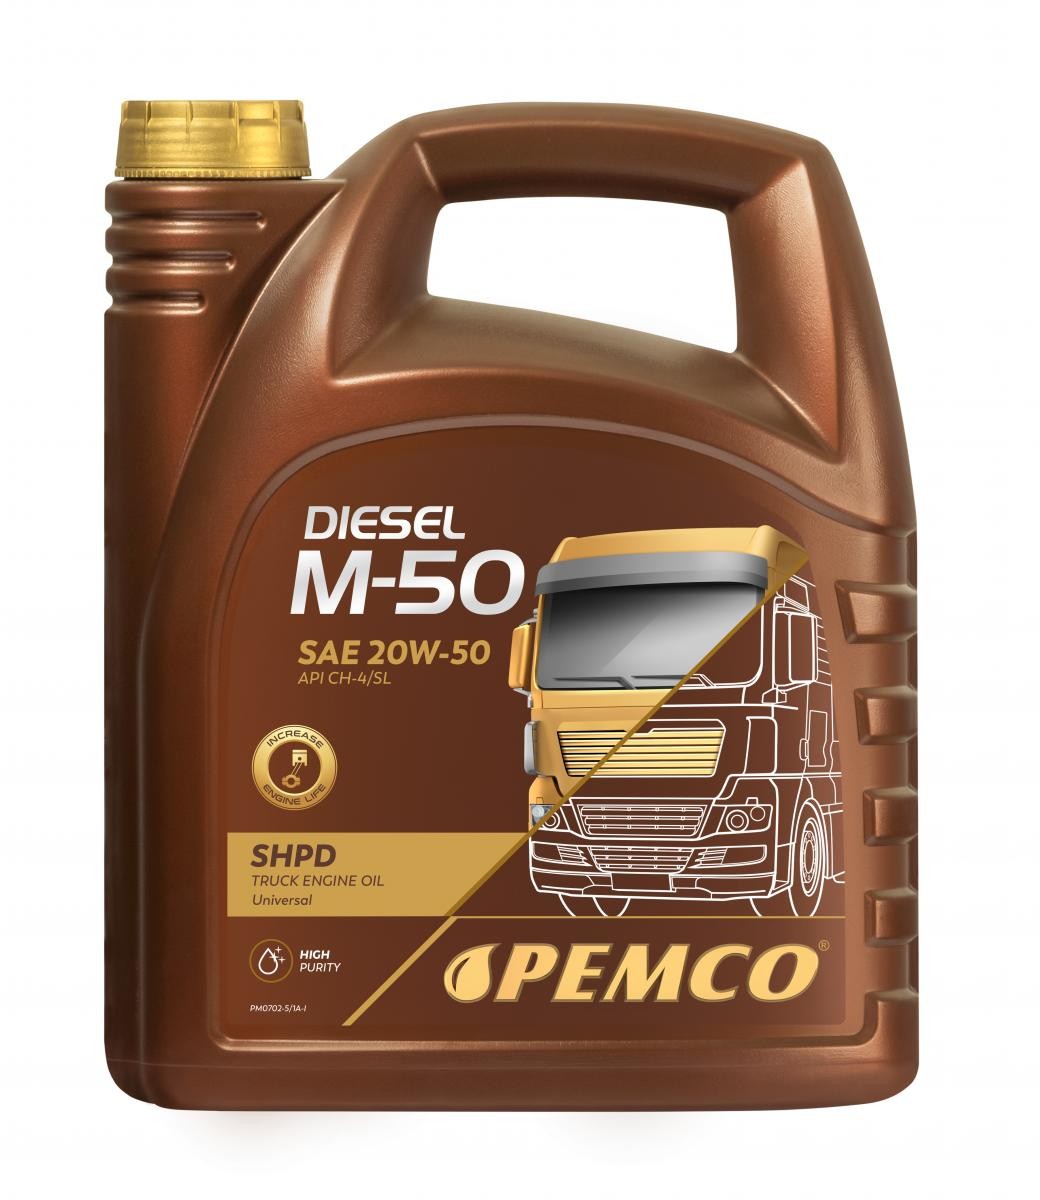 Automobile oil API CG 4 PEMCO - PM0702-5 Truck SHPD, DIESEL M-50 SHPD